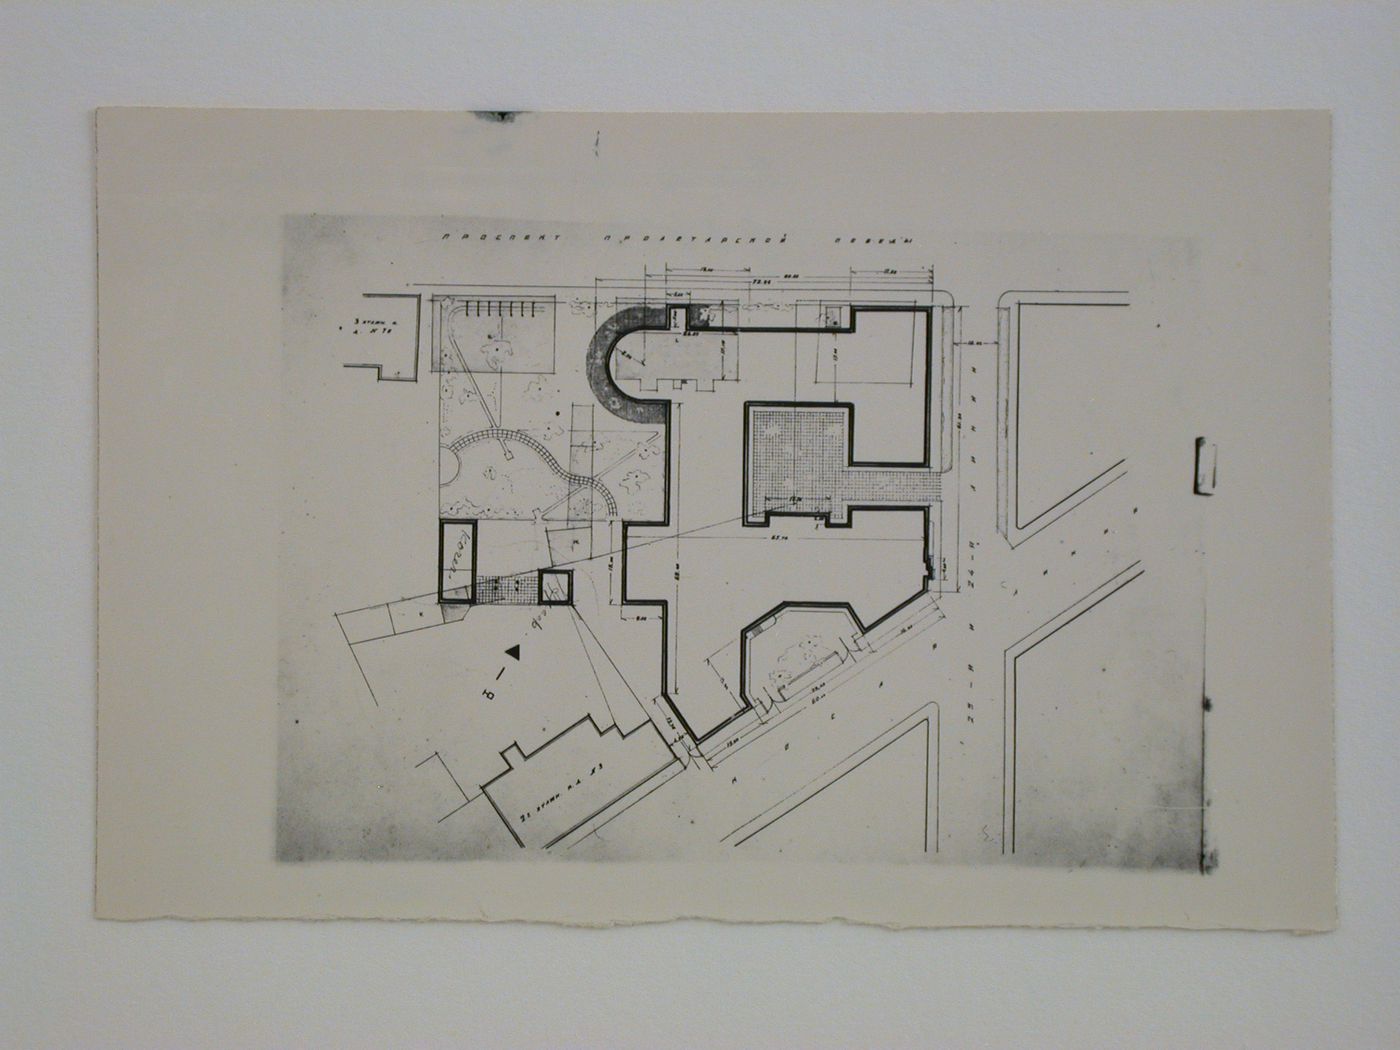 Photograph of a site plan for Vasileostrovskaya Mechanized Canteen, Leningrad (now Saint Petersburg)